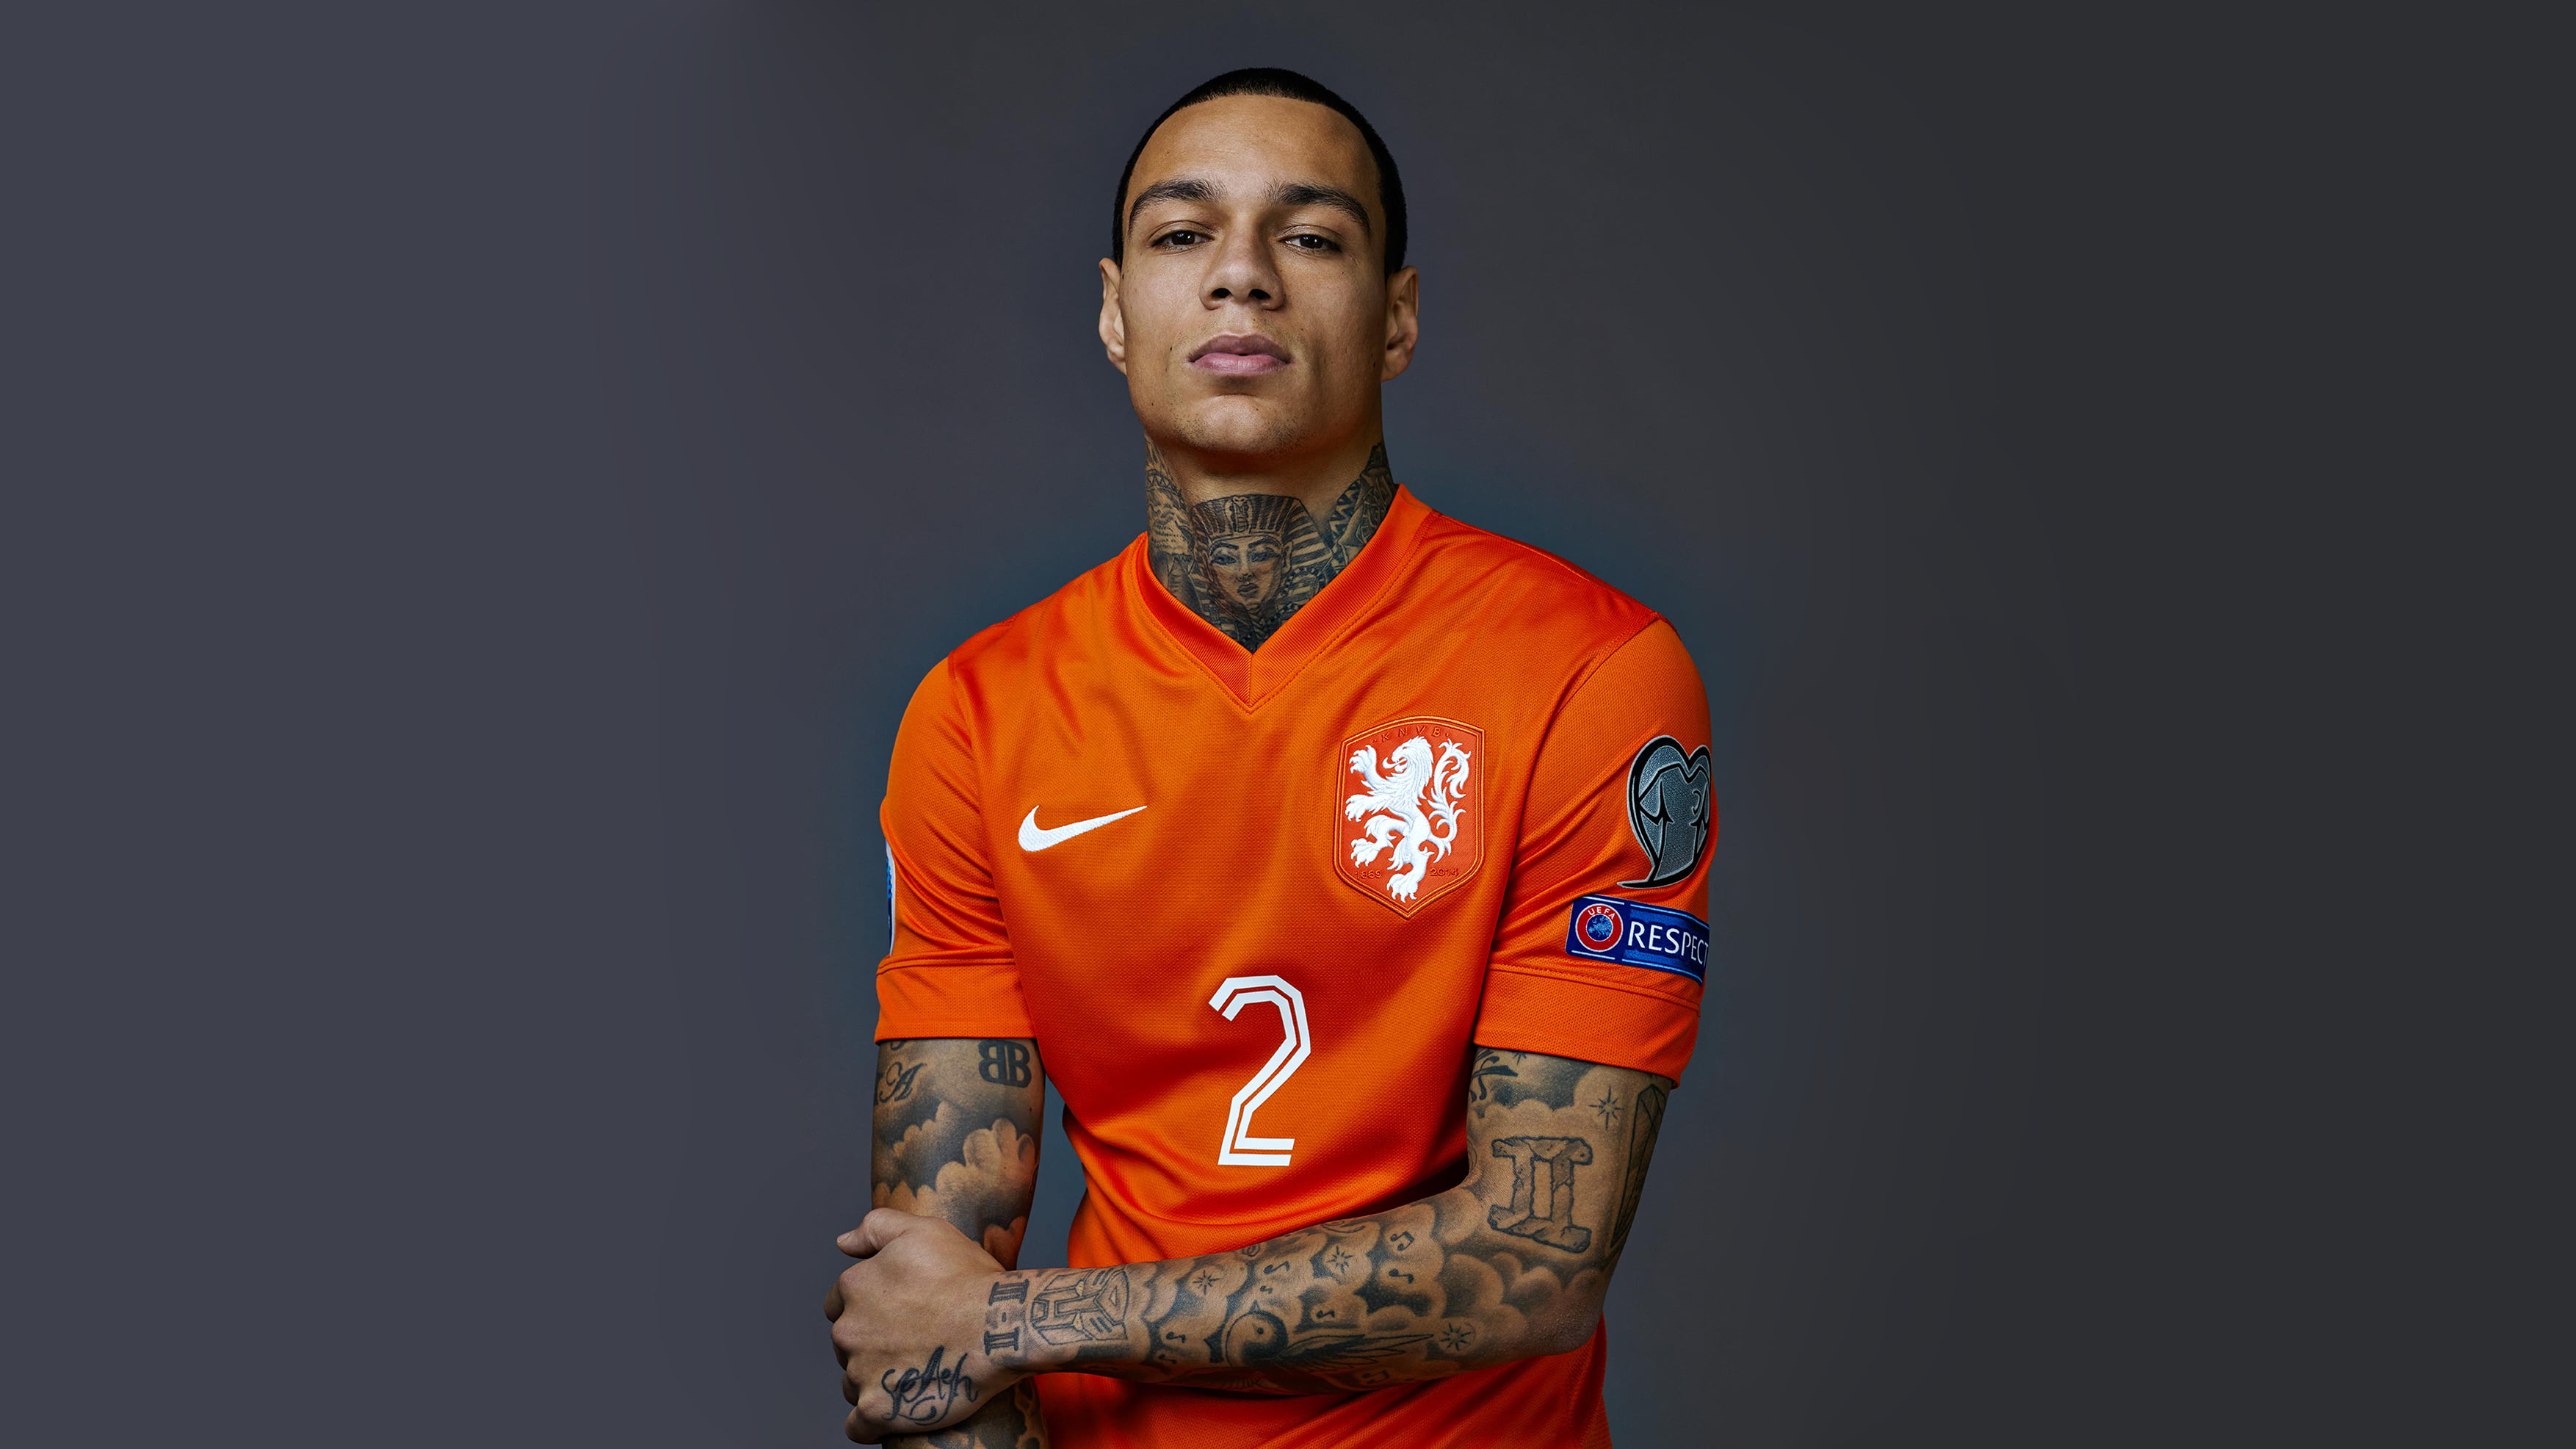 men's orange Nike soccer jersey shirt, footballers, players, tattoo, simple background